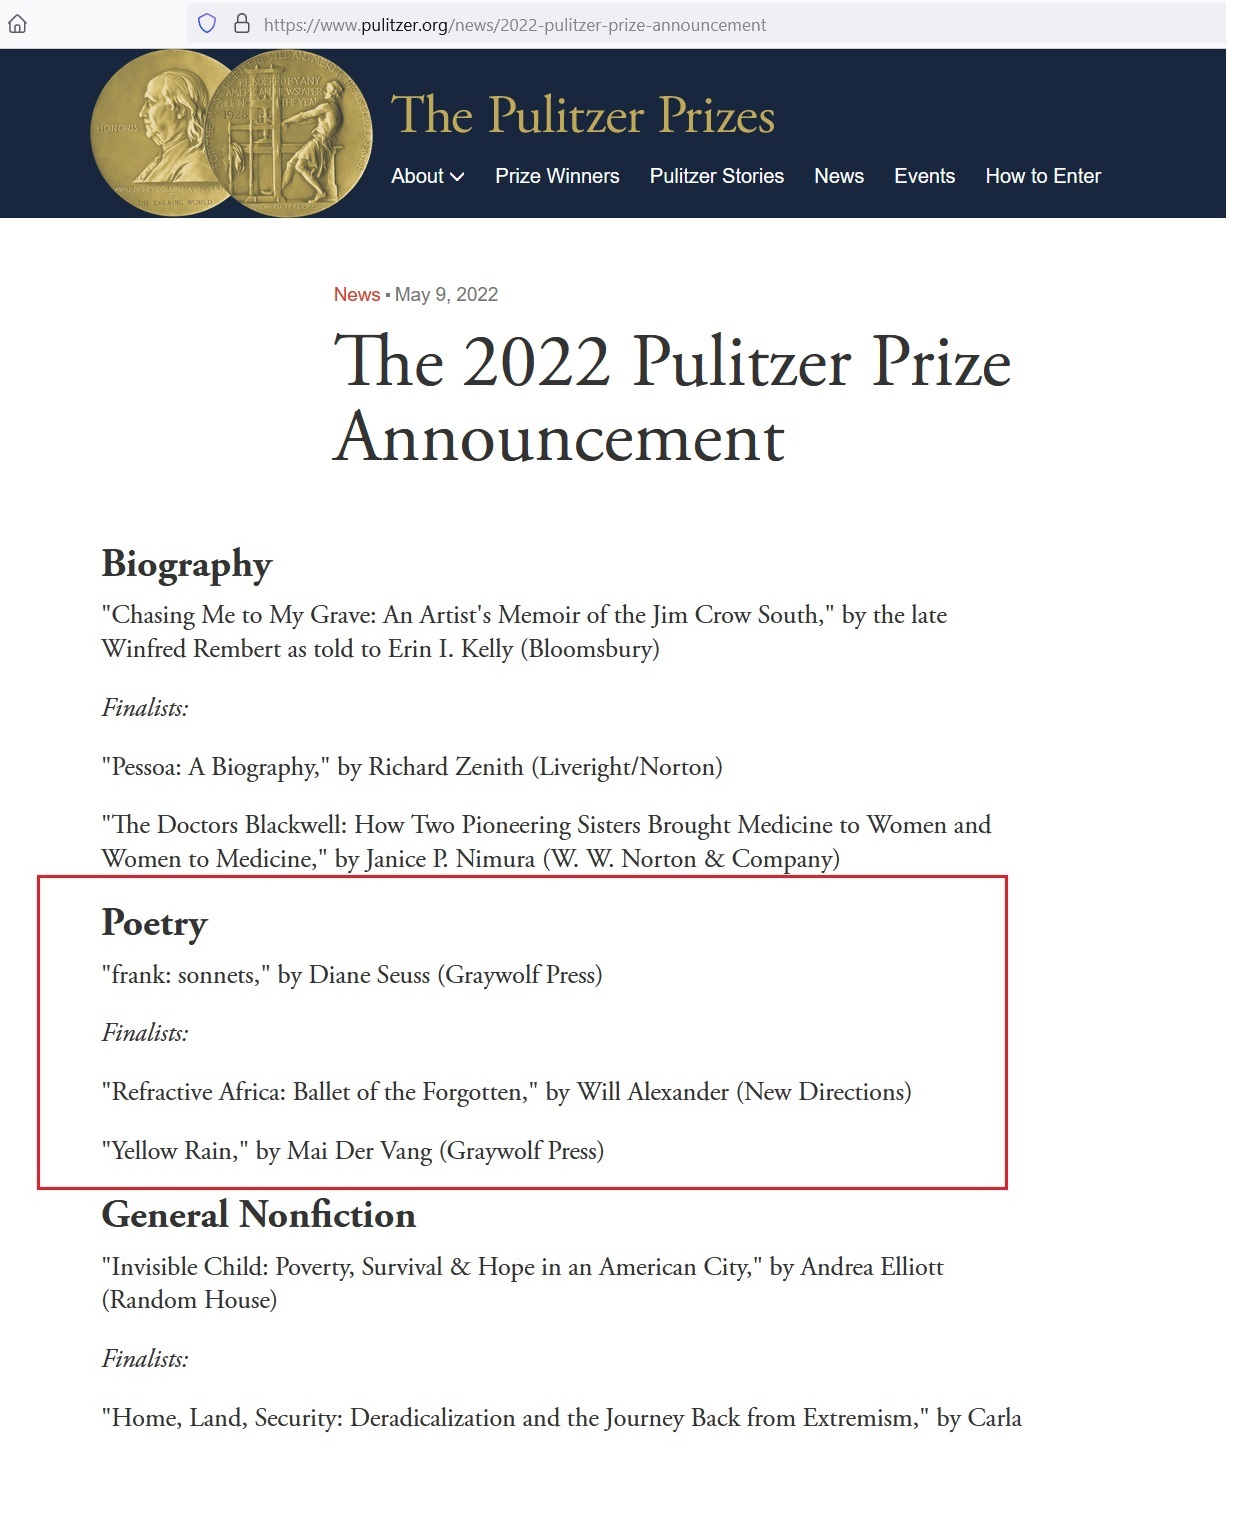 Pulitzer-price-2022-diane-seuss-graywolf